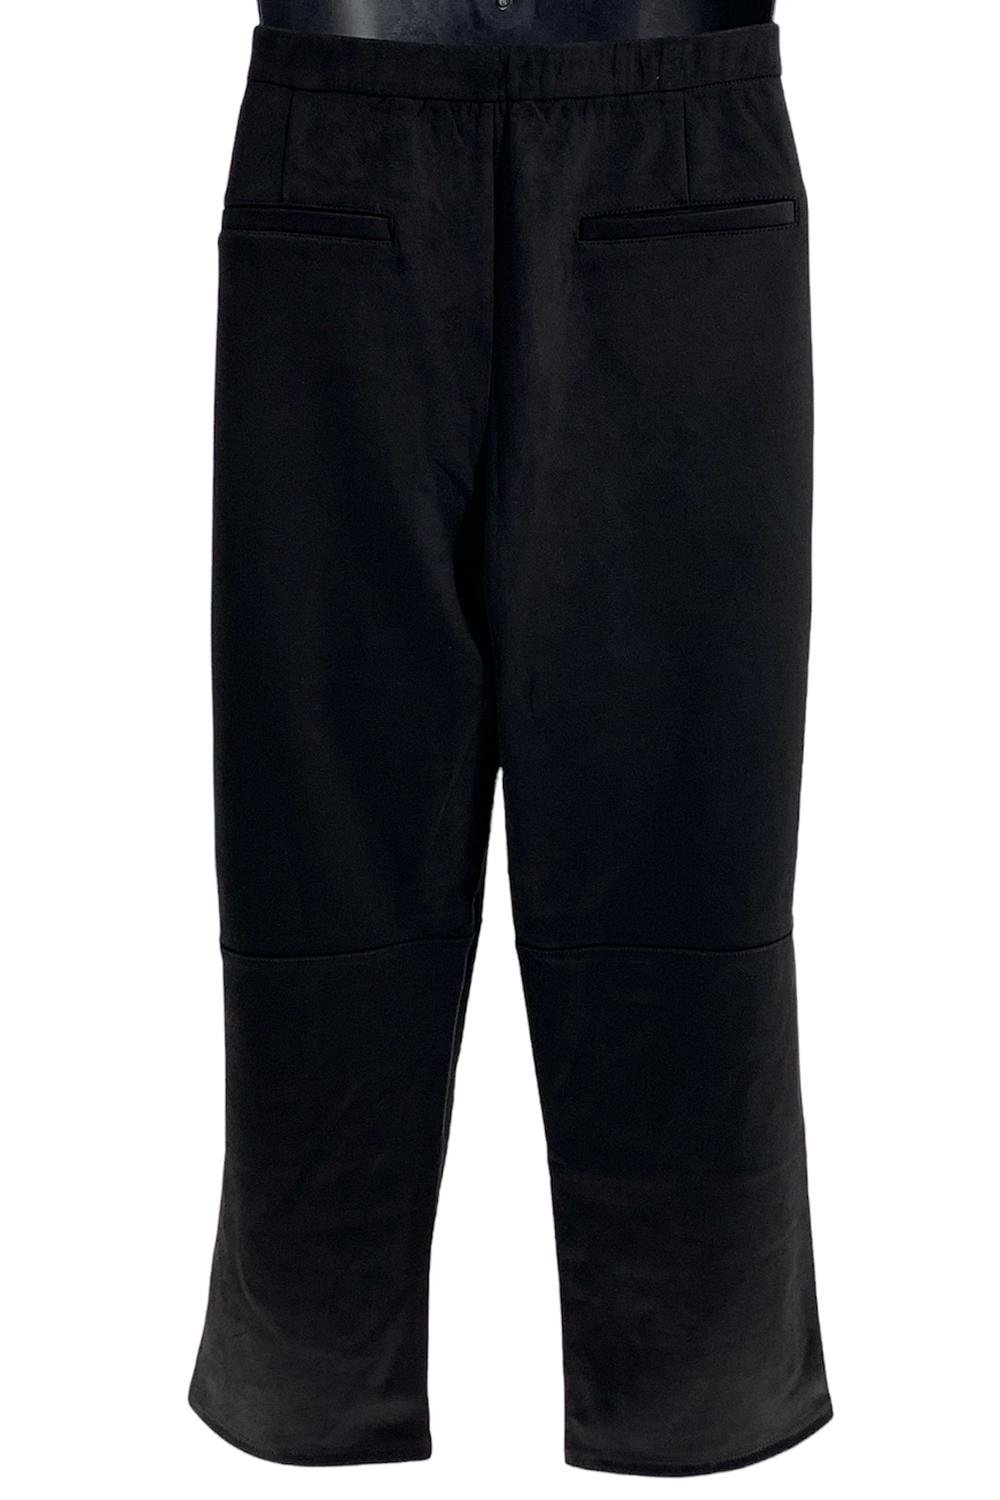 Isaac Mizrahi Live Regular Wide Leg Ponte Knit Pants, $55